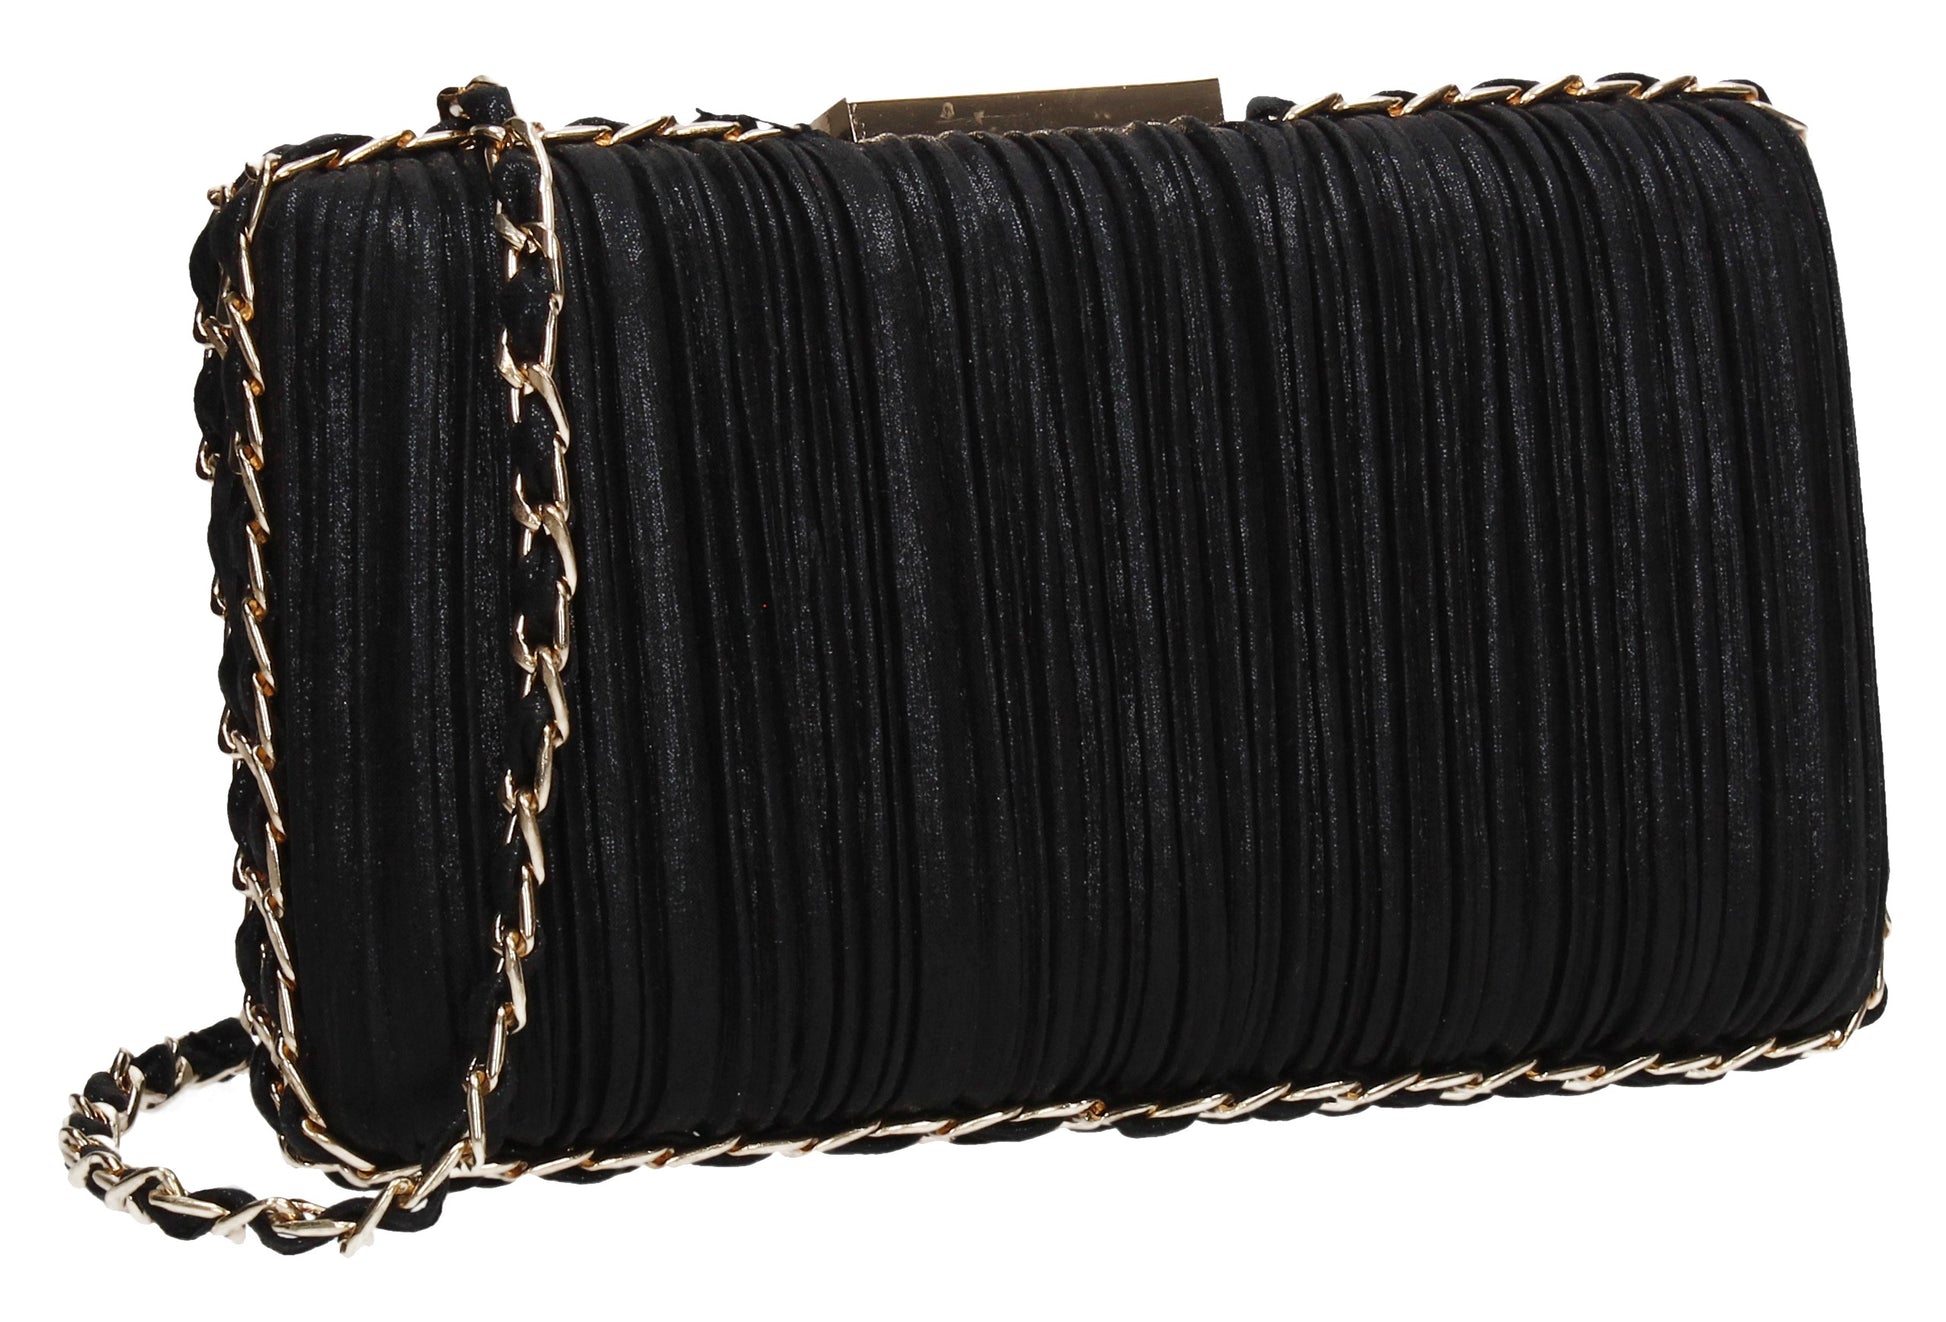 SWANKYSWANS Lacey Chain Clutch Bag Black Cute Cheap Clutch Bag For Weddings School and Work